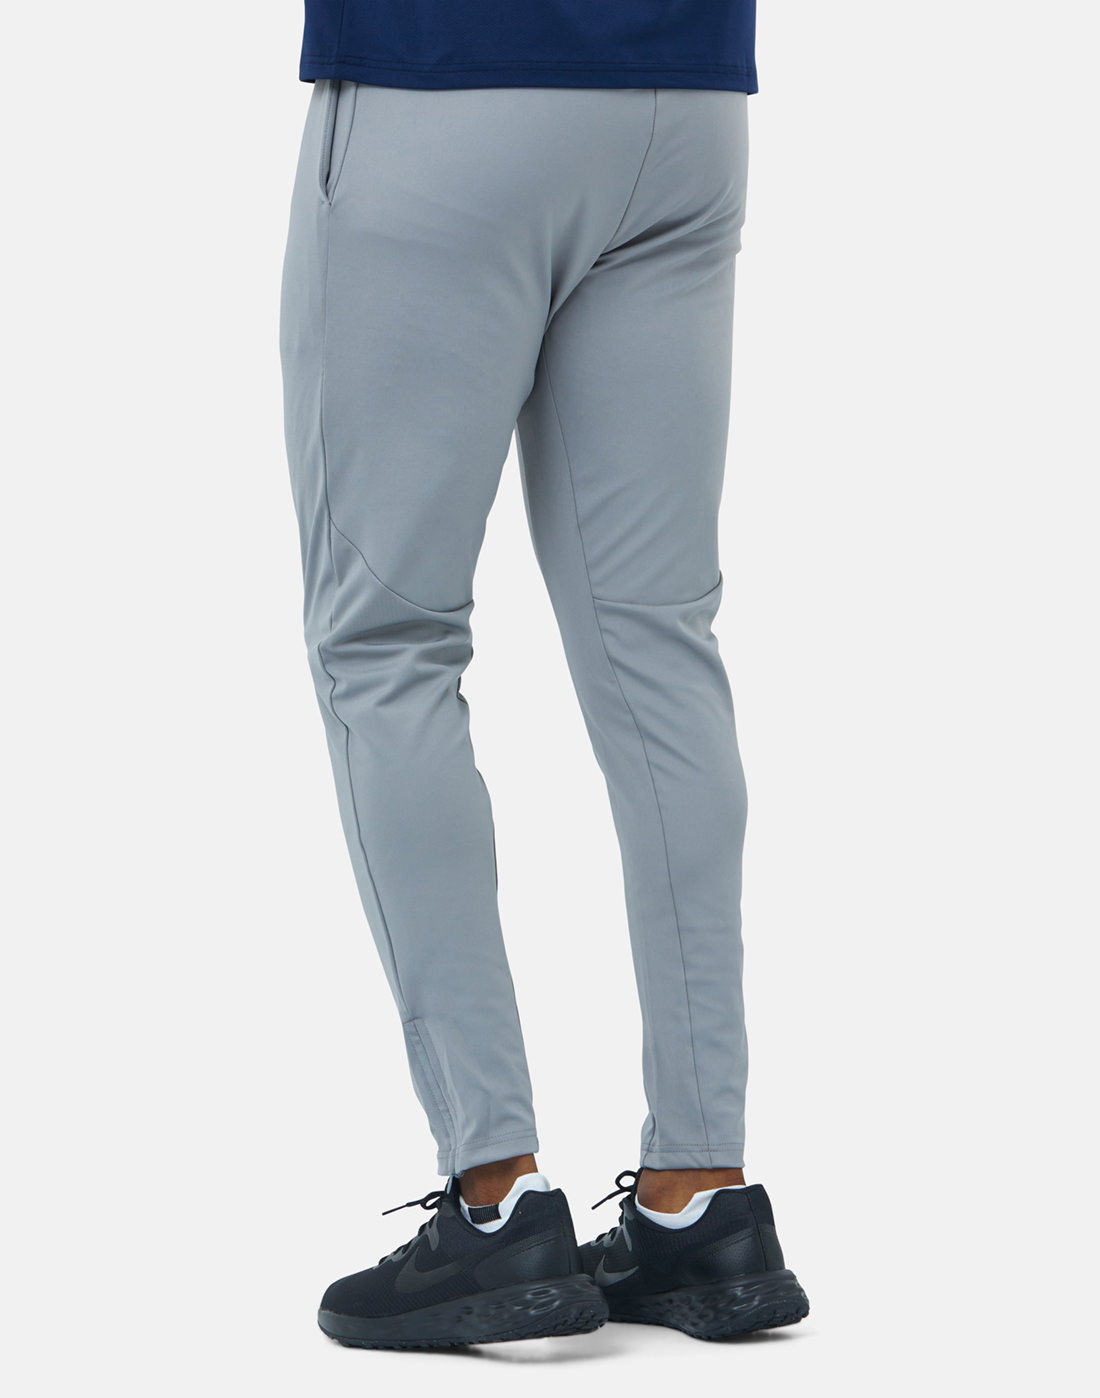 Castore Mens Protek 365 Pants - Grey | Life Style Sports UK